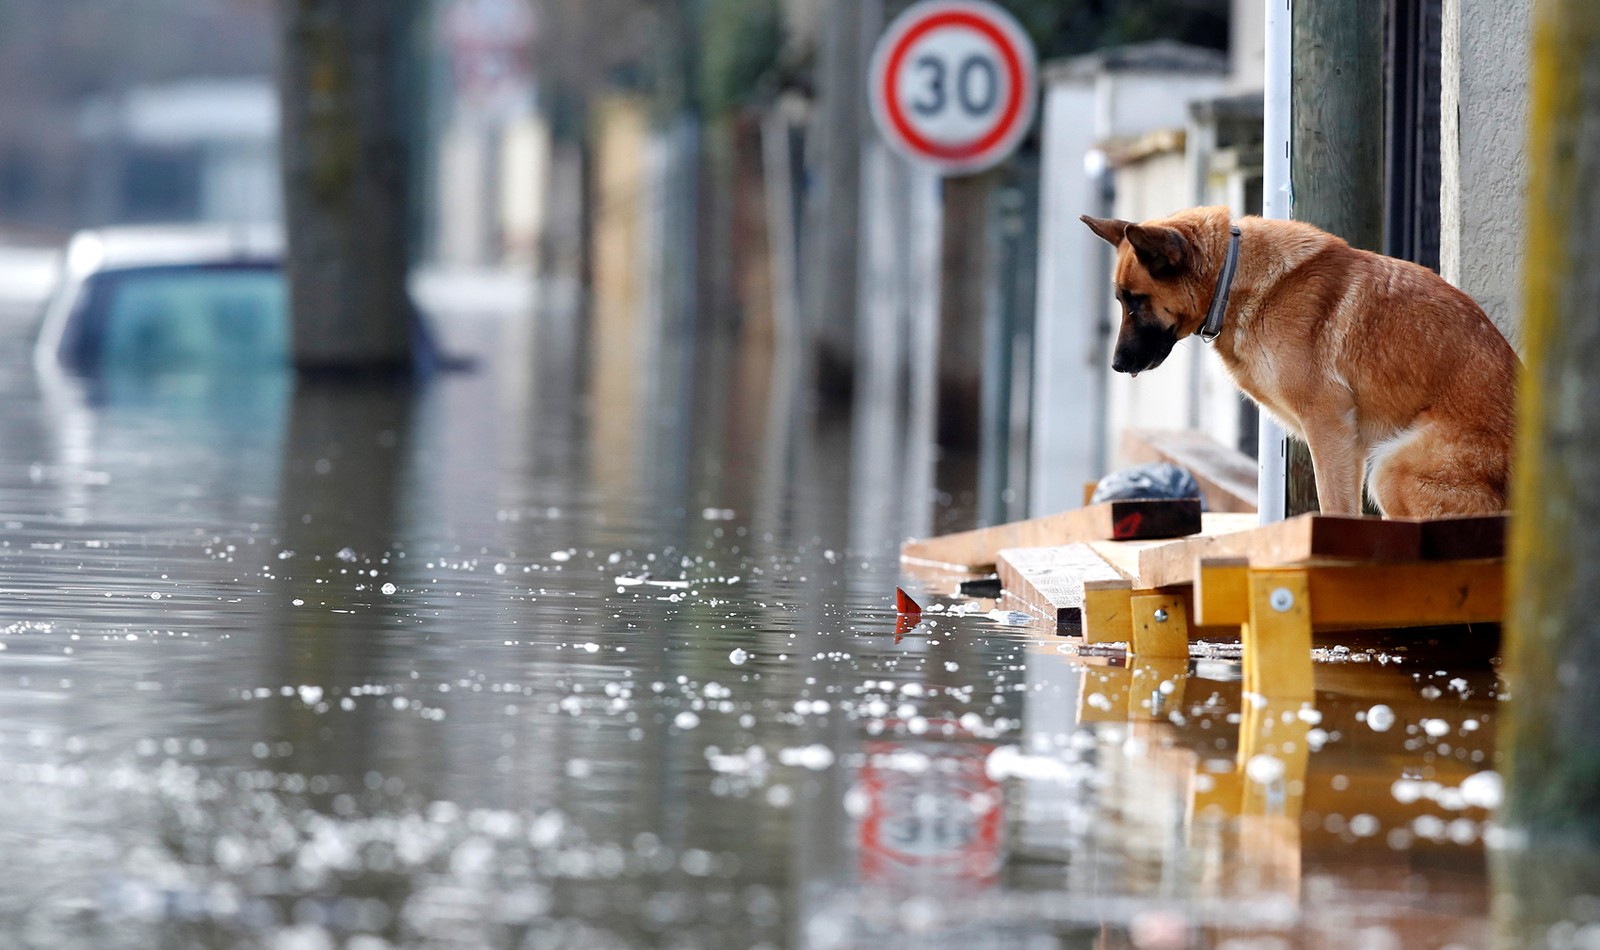 Christian Hartmann, Loneliness, Animals, German Shepherd, Dog, Water, Street, Flood, Road sign, Reflection, Sadness, Paris, France, 2018 (Year), Alone Wallpaper